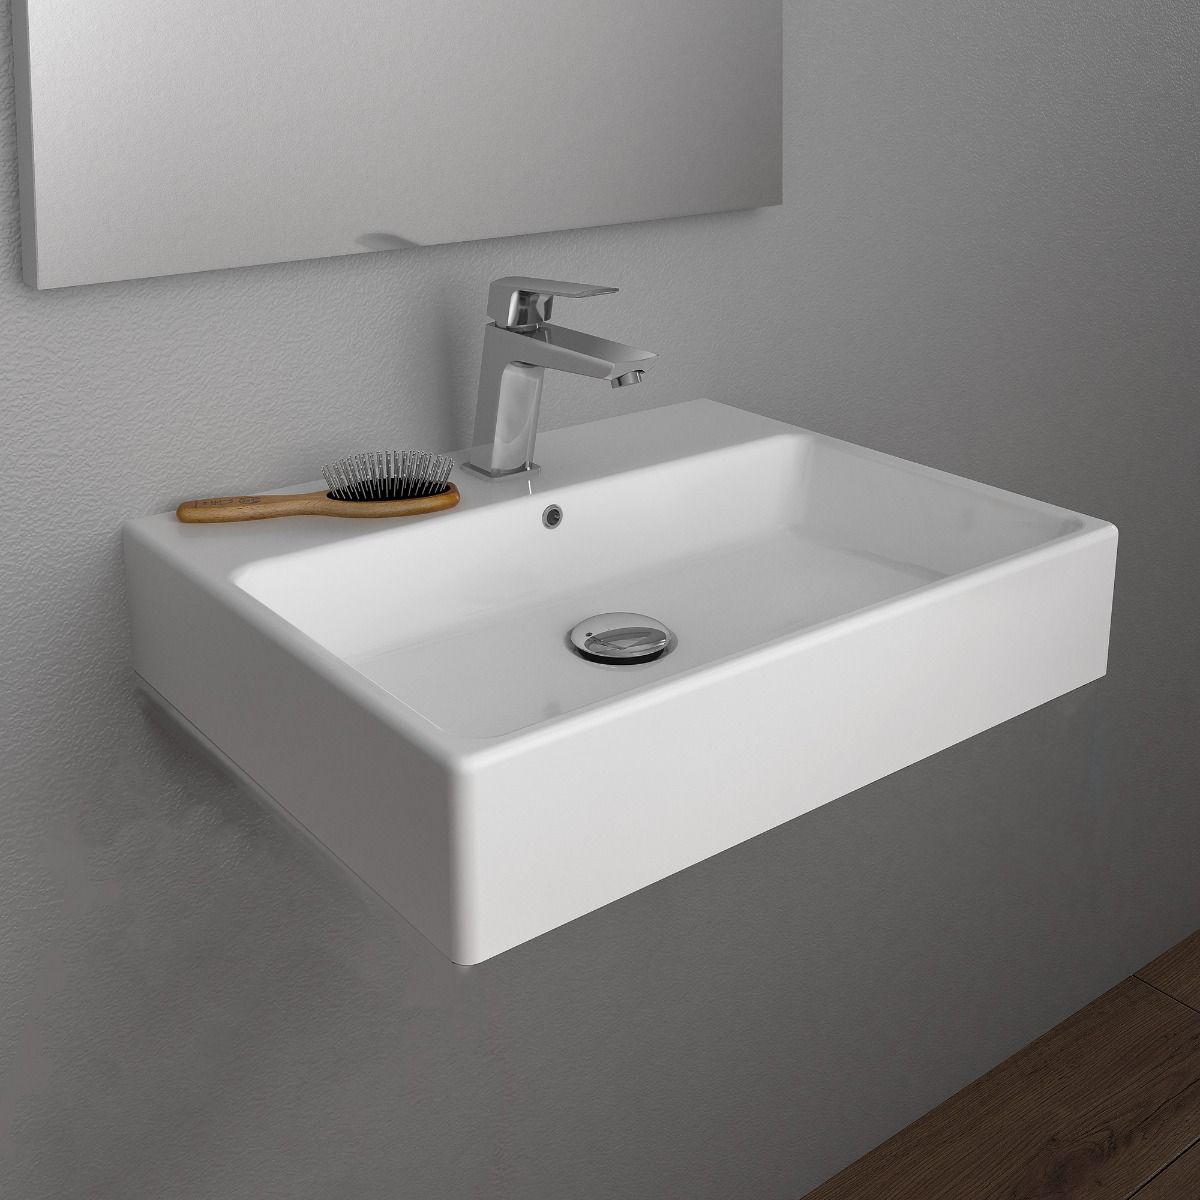 Best Wall Mount Bathroom Sink Design